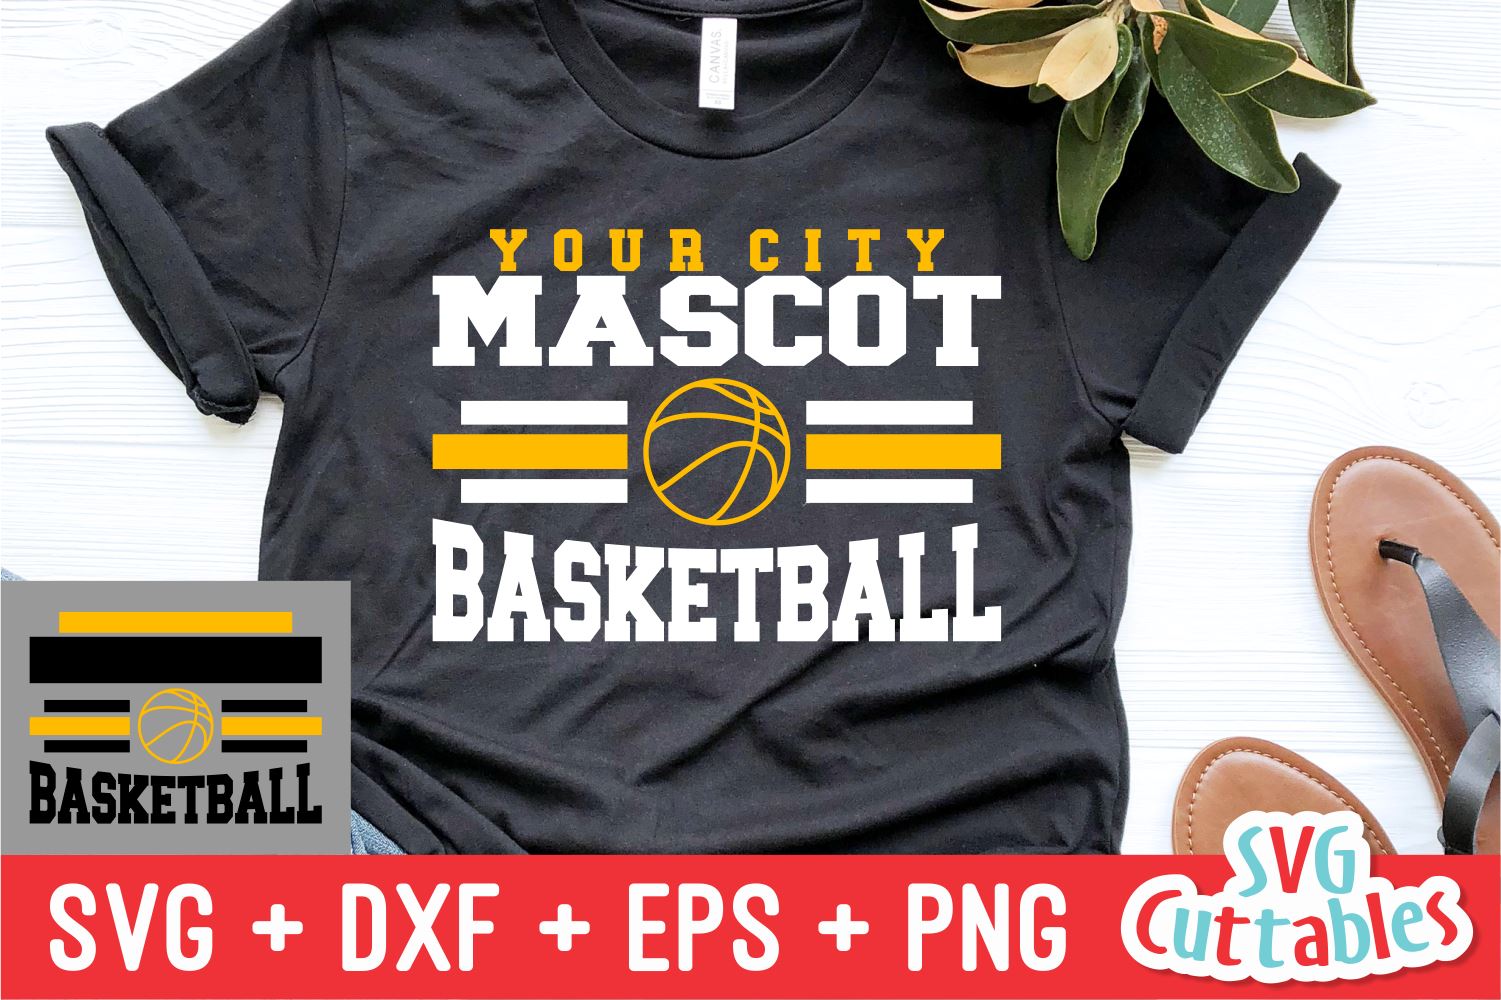 Basketball Team Template Shirt Design, Svg Png Dxf Eps